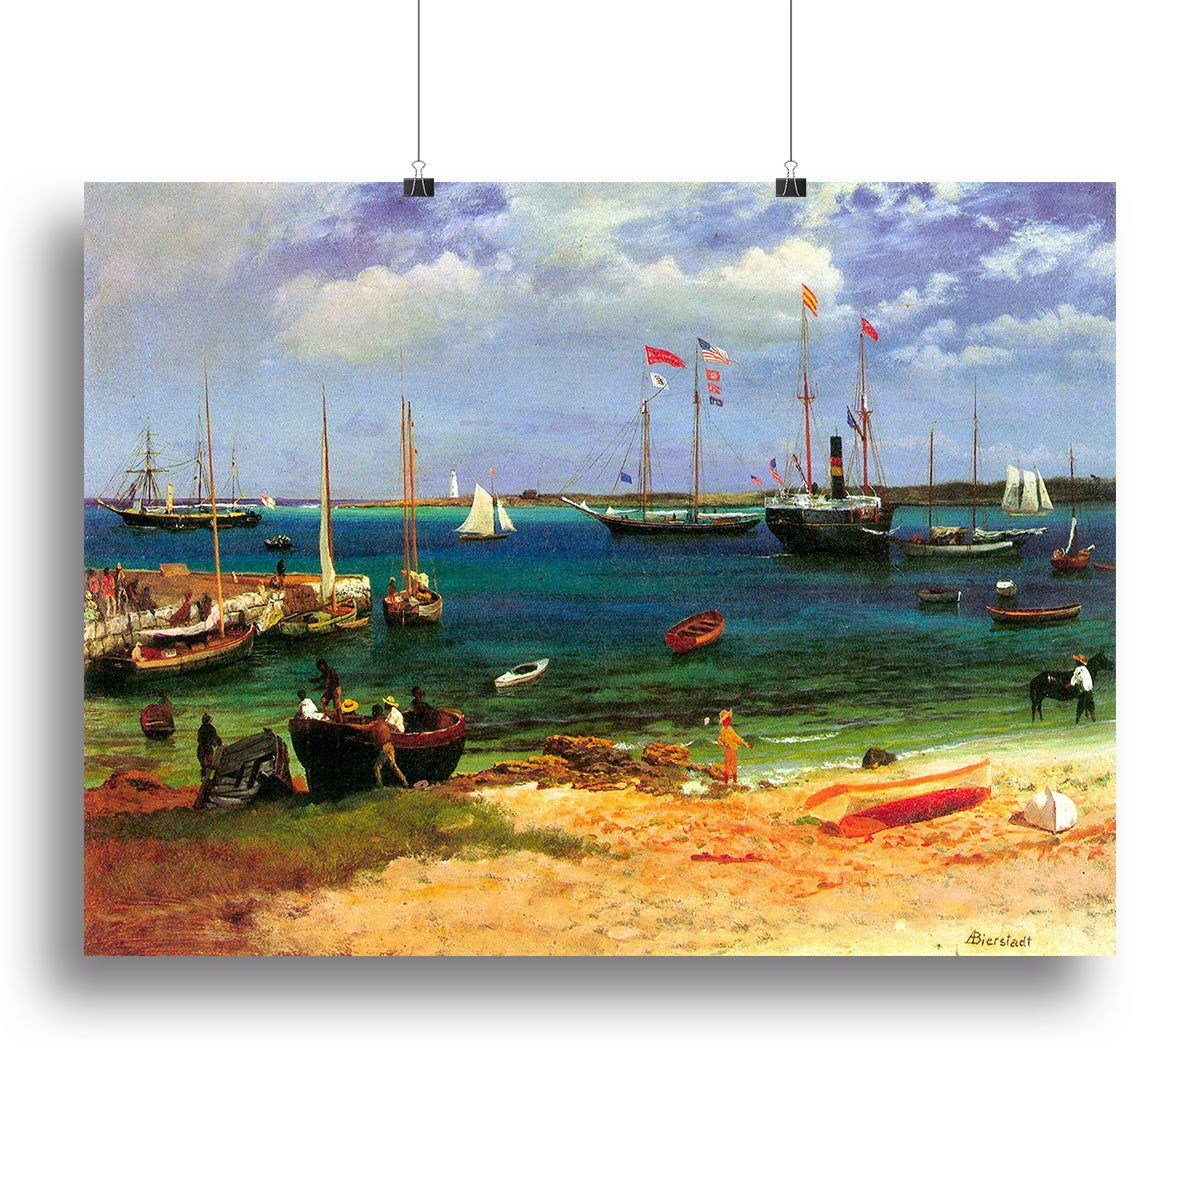 Nassau port by Bierstadt Canvas Print or Poster - Canvas Art Rocks - 2